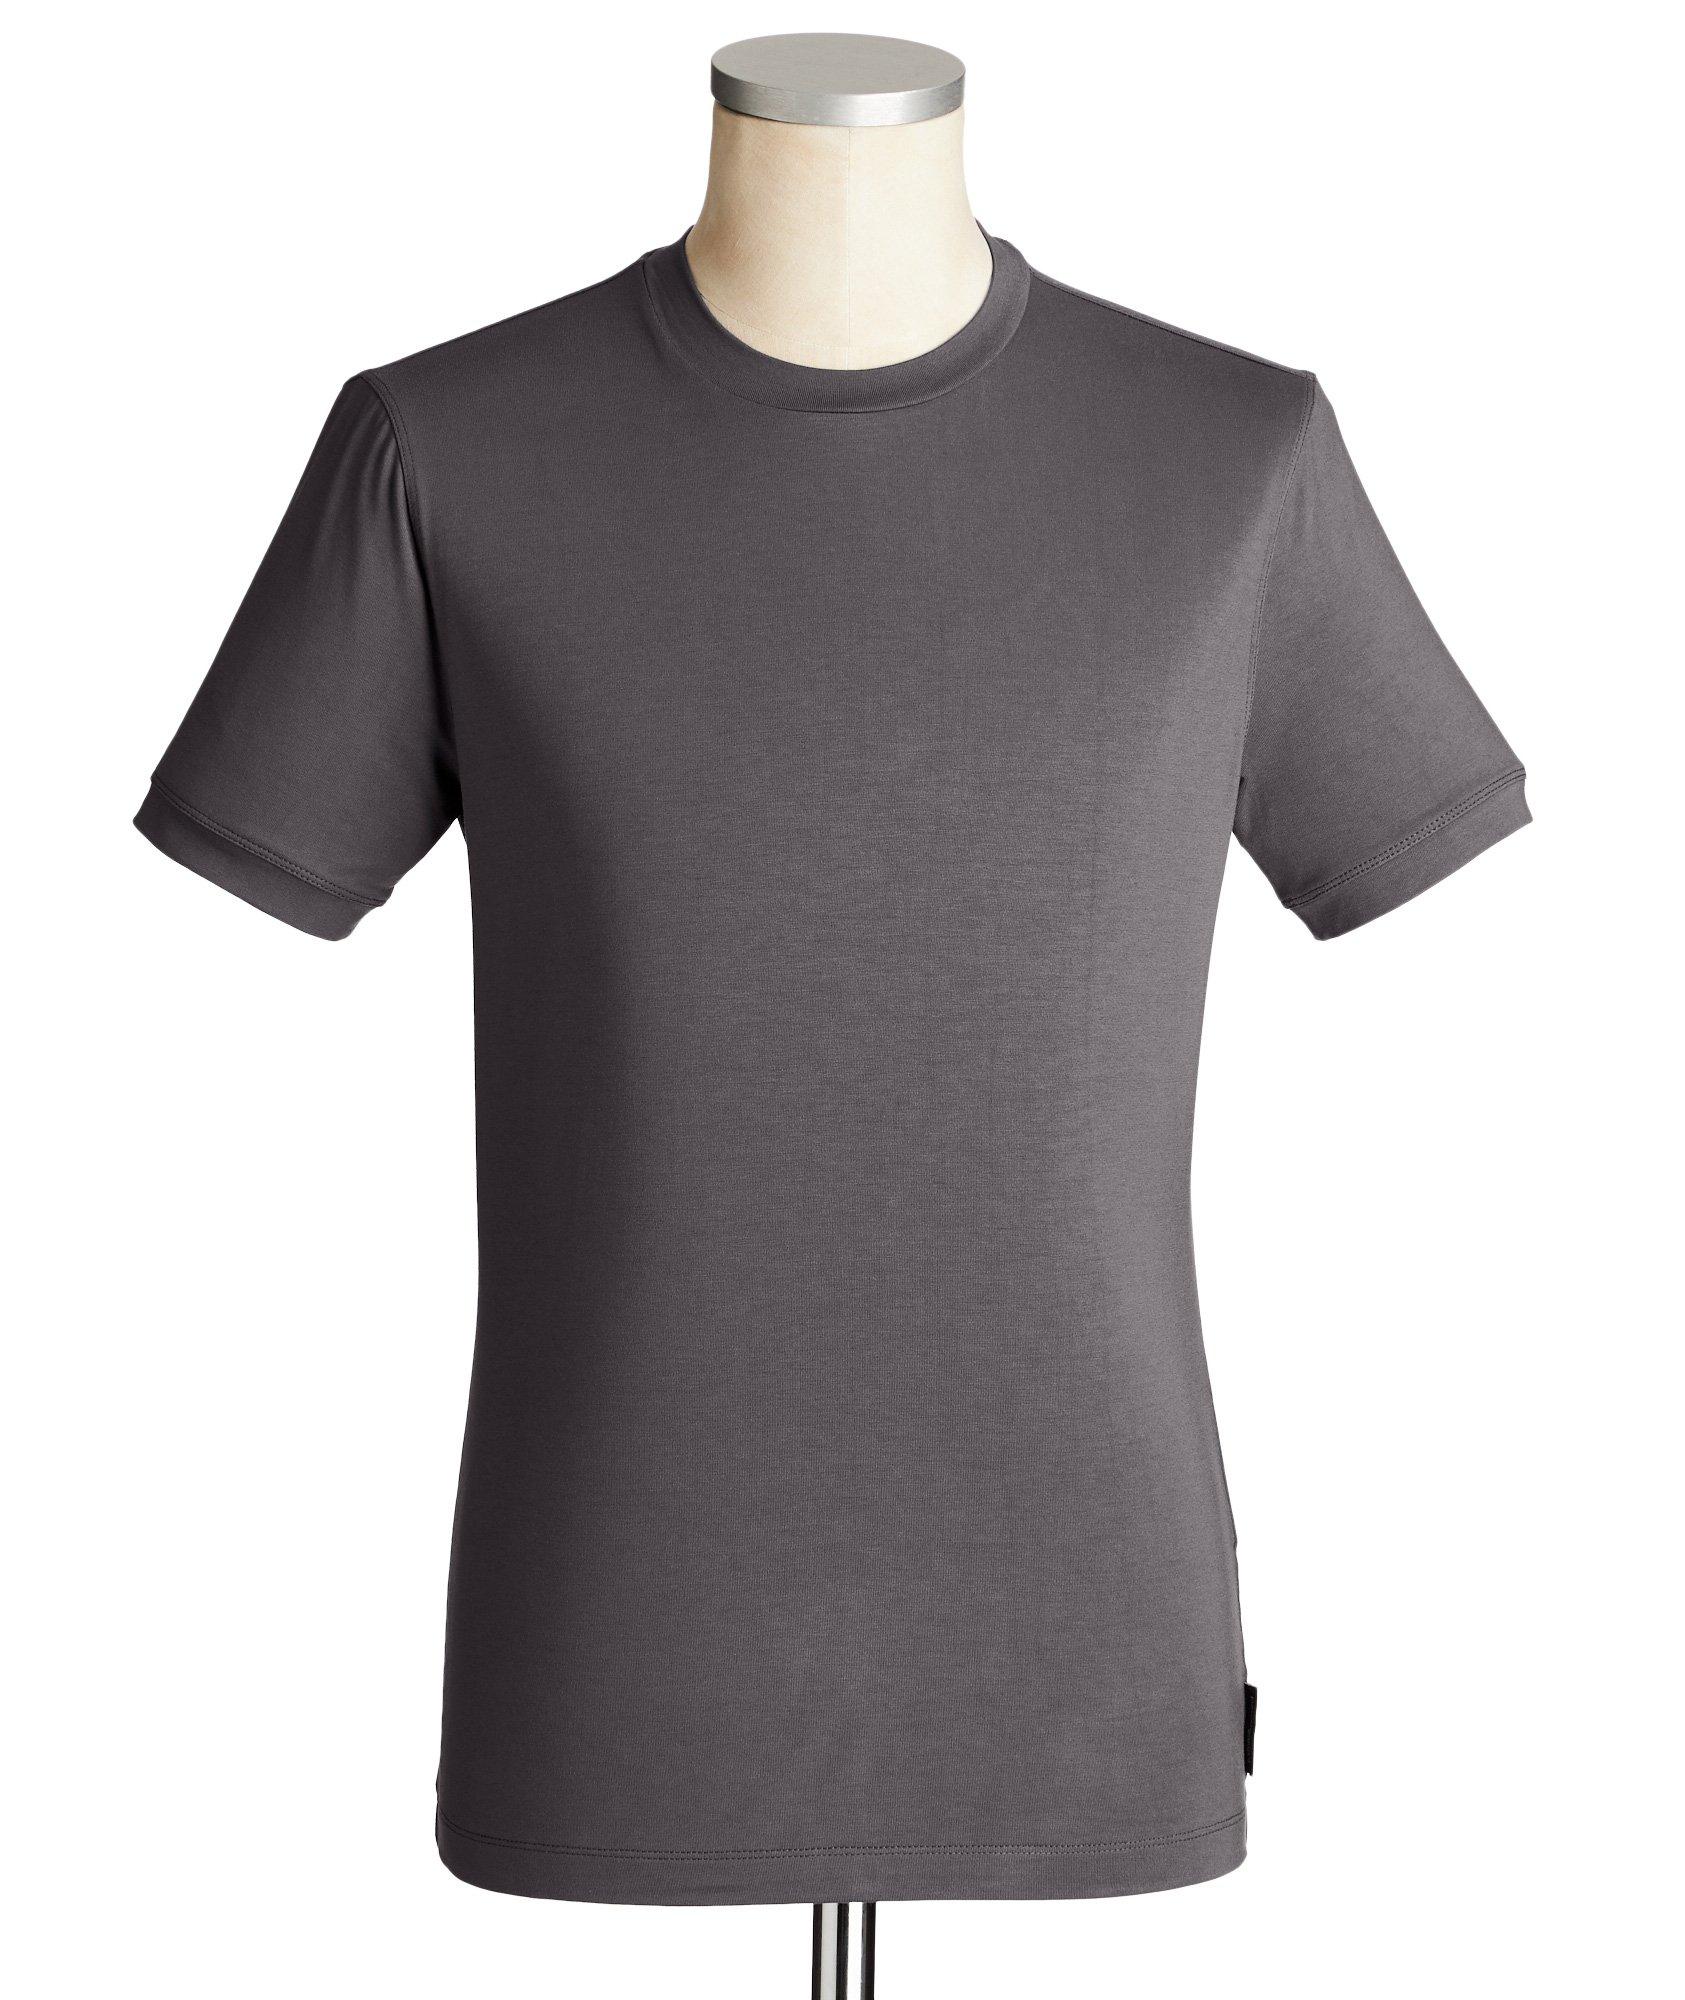 Stretch-Blend T-Shirt image 0